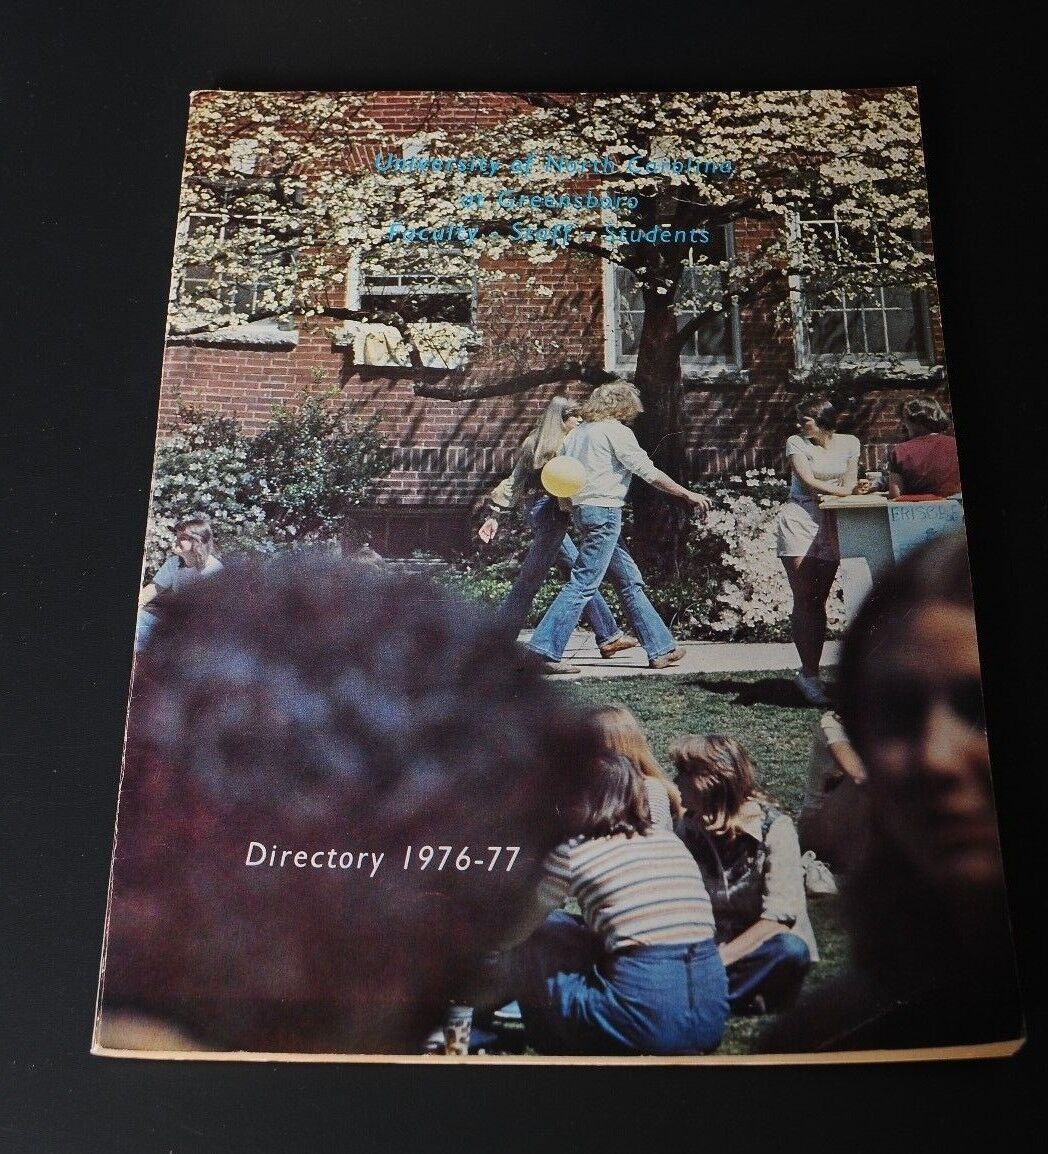 Vintage 1976-77 University of North Carolina Greensboro telephone directory